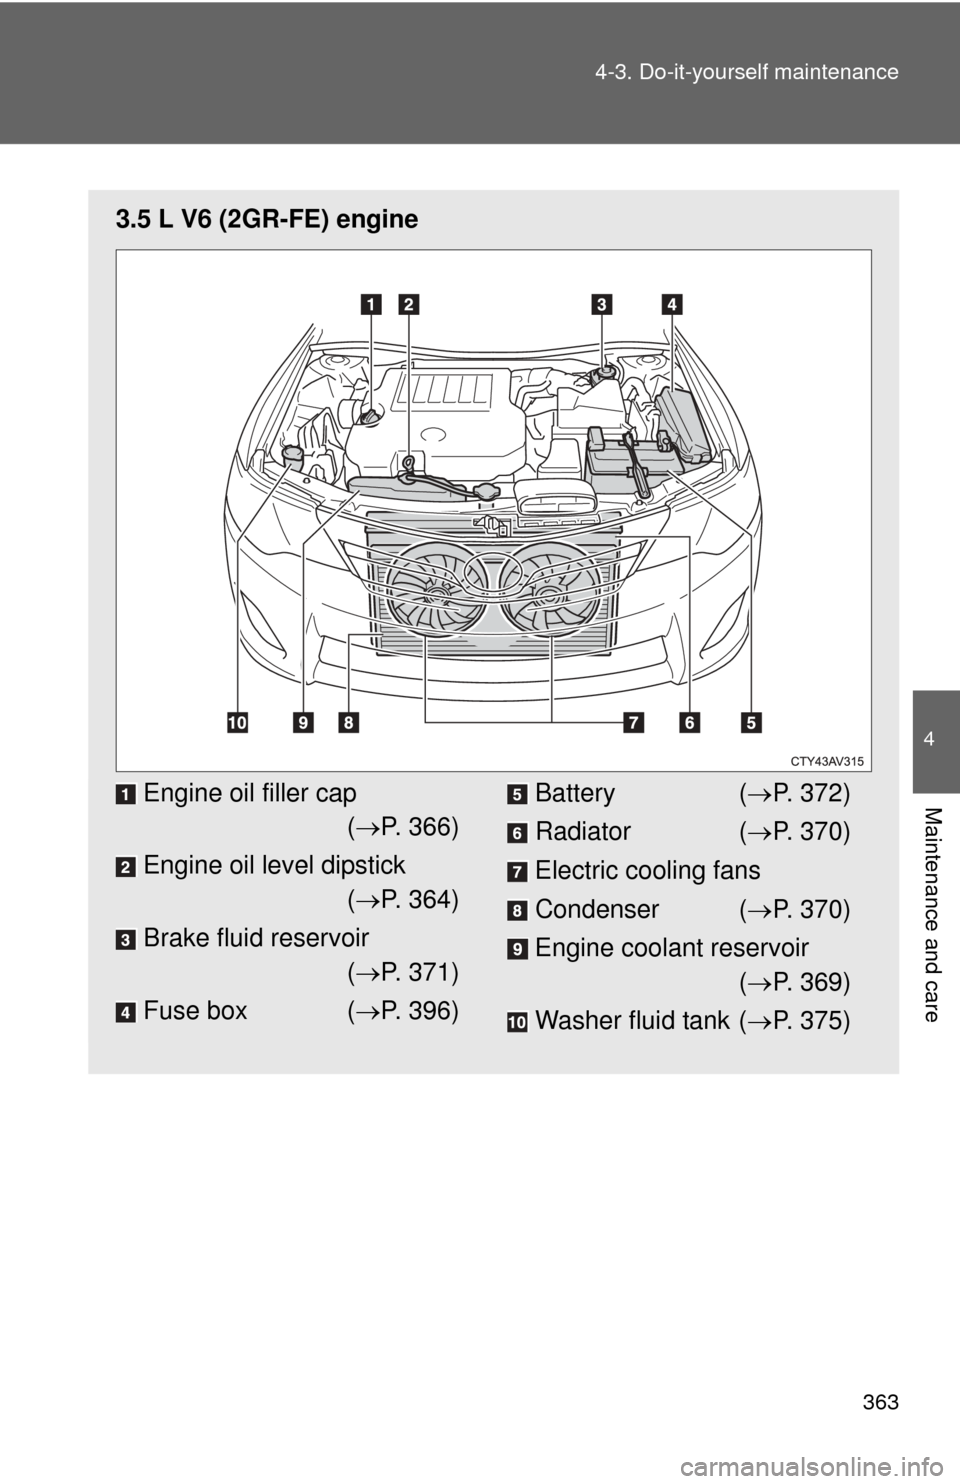 TOYOTA CAMRY 2013 XV50 / 9.G Owners Manual 363
4-3. Do-it-yourself maintenance
4
Maintenance and care
3.5 L V6 (2GR-FE) engine
Engine oil filler cap
( P. 366)
Engine oil level dipstick ( P. 364)
Brake fluid reservoir ( P. 371)
Fuse bo